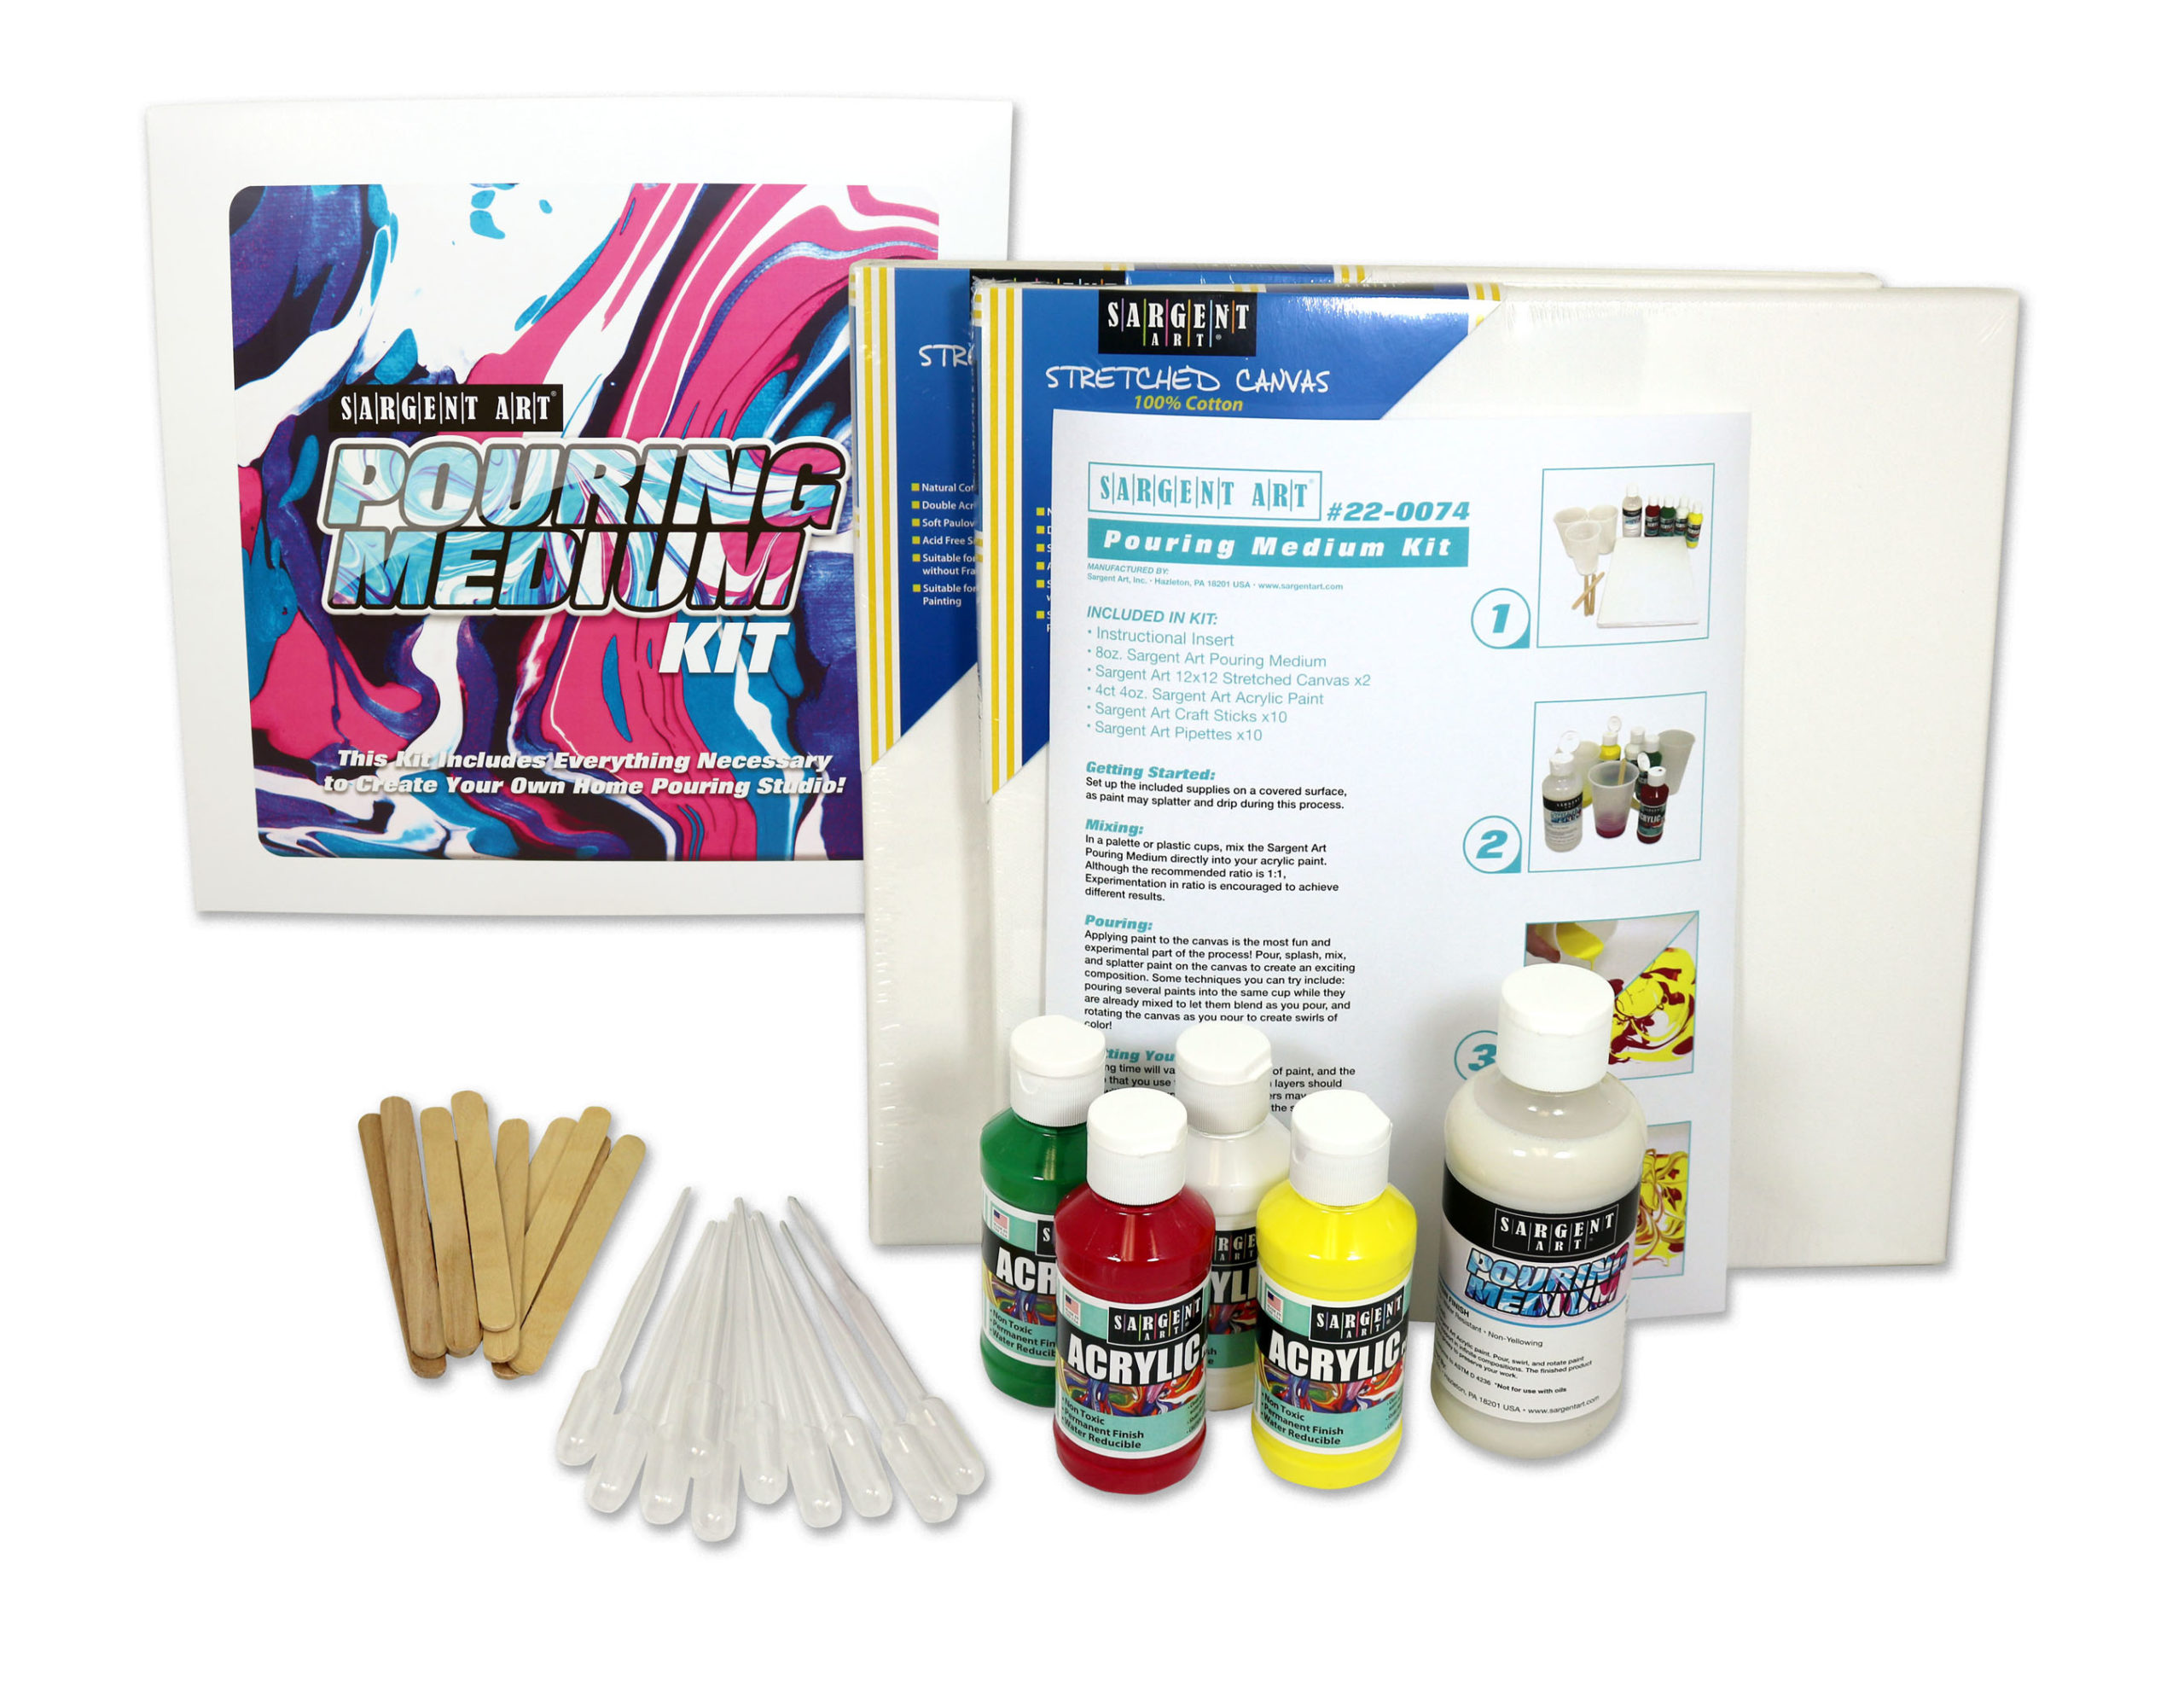 Sargent Art ® Pre-Mixed Acrylic Regular Pouring Paints